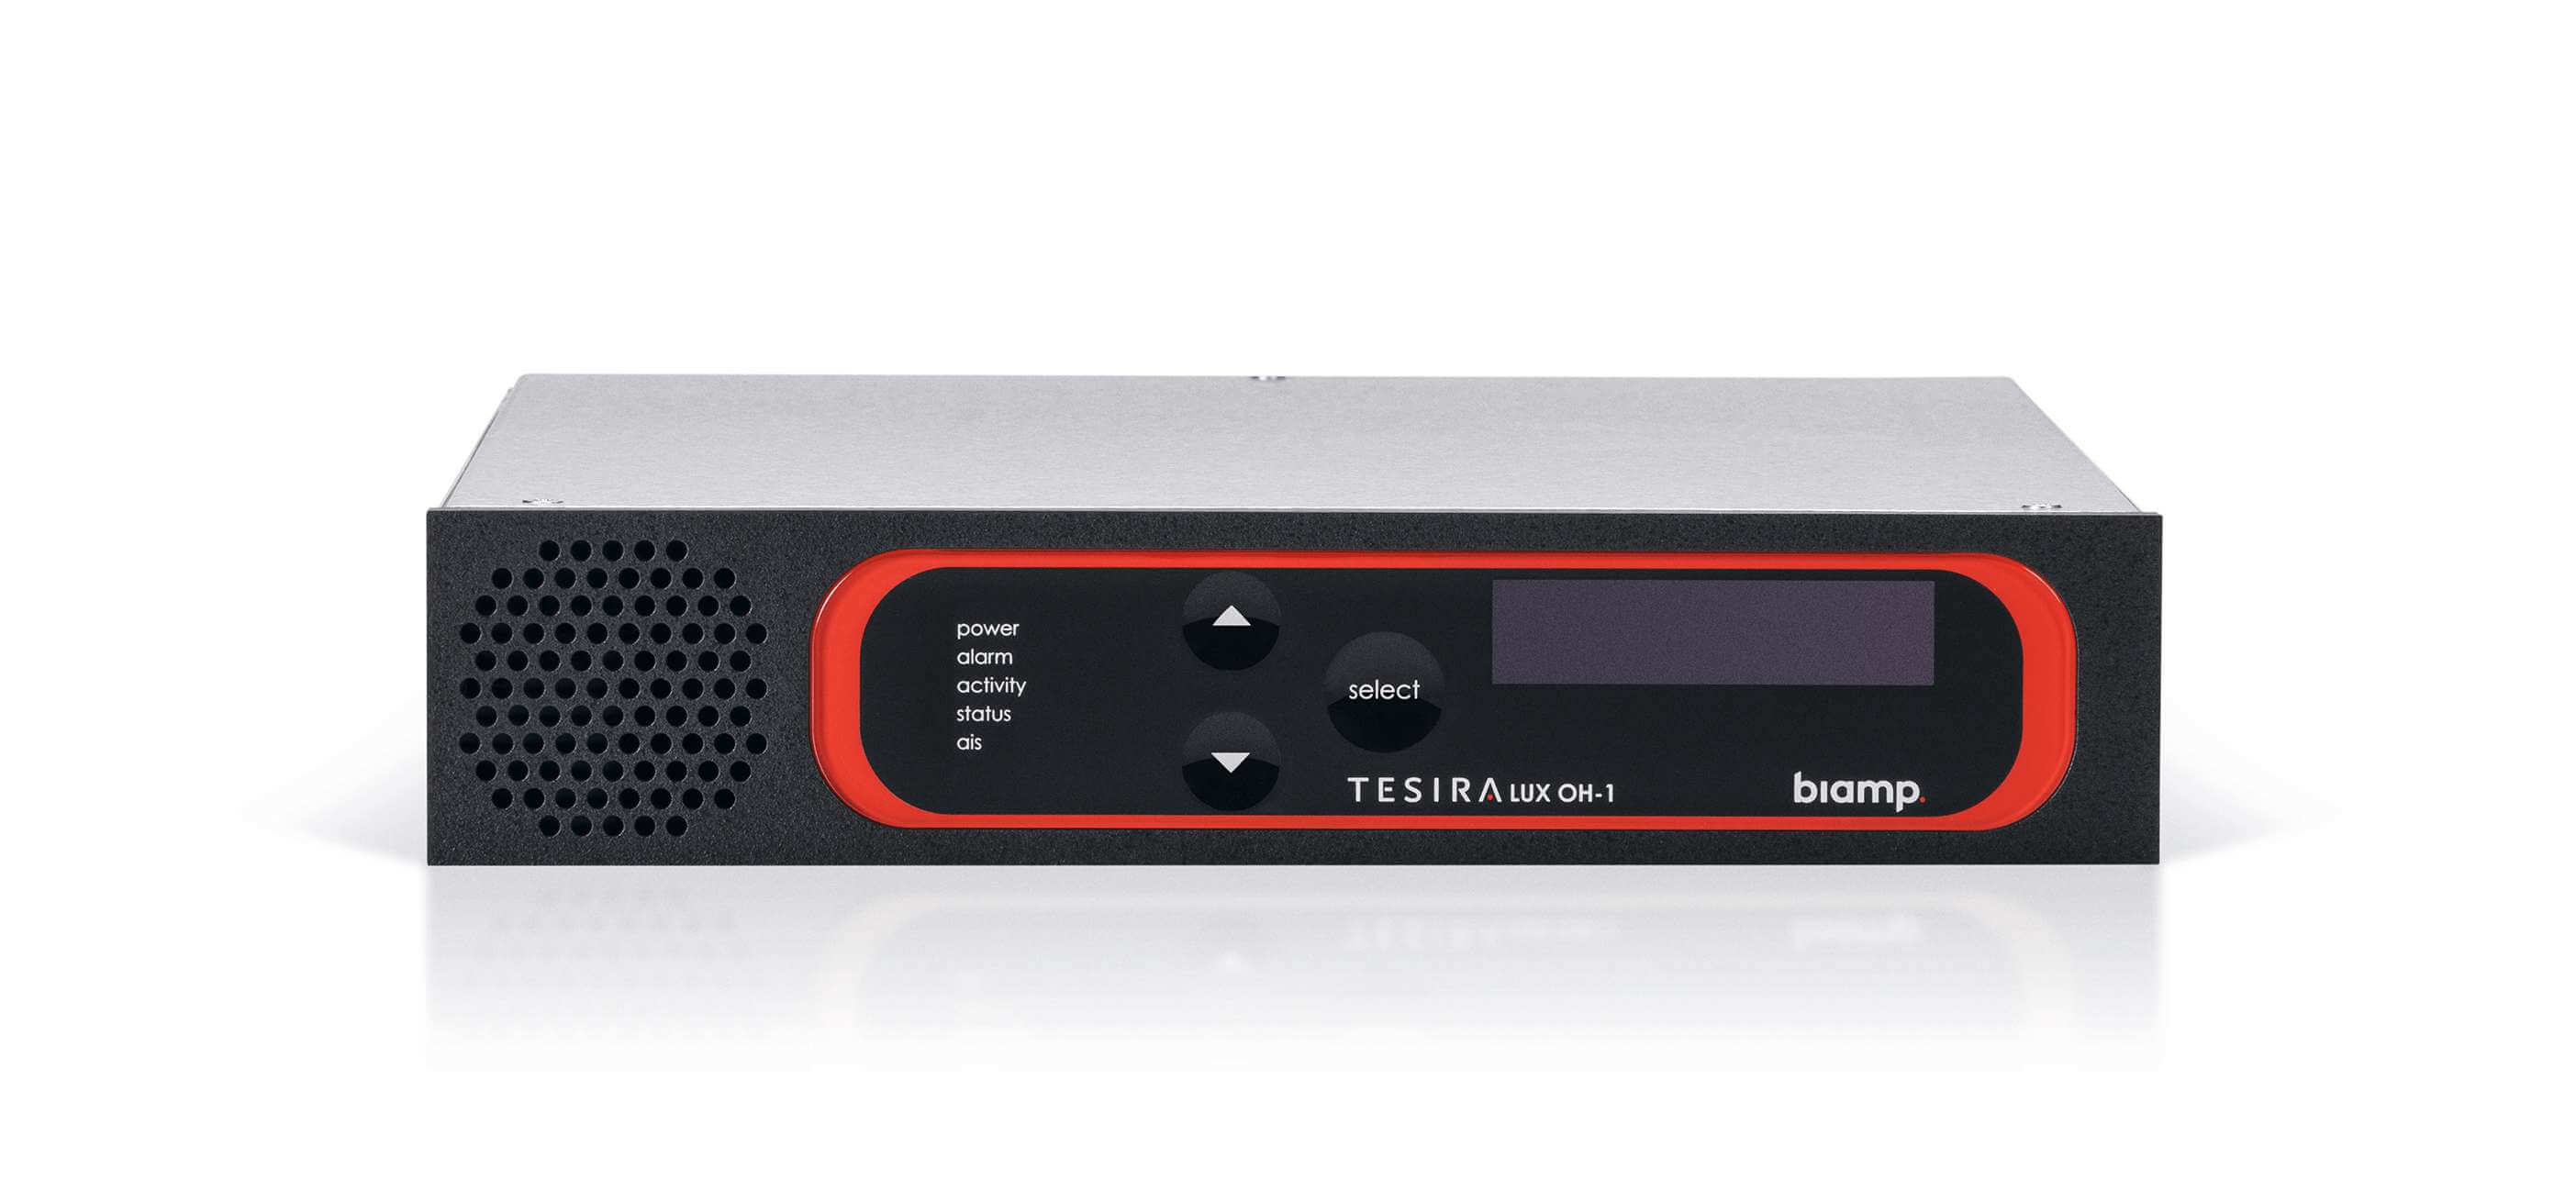 Biamp TesiraLUX OH-1 Decodificador de video AVB; incluye un puerto HDMI 2.0